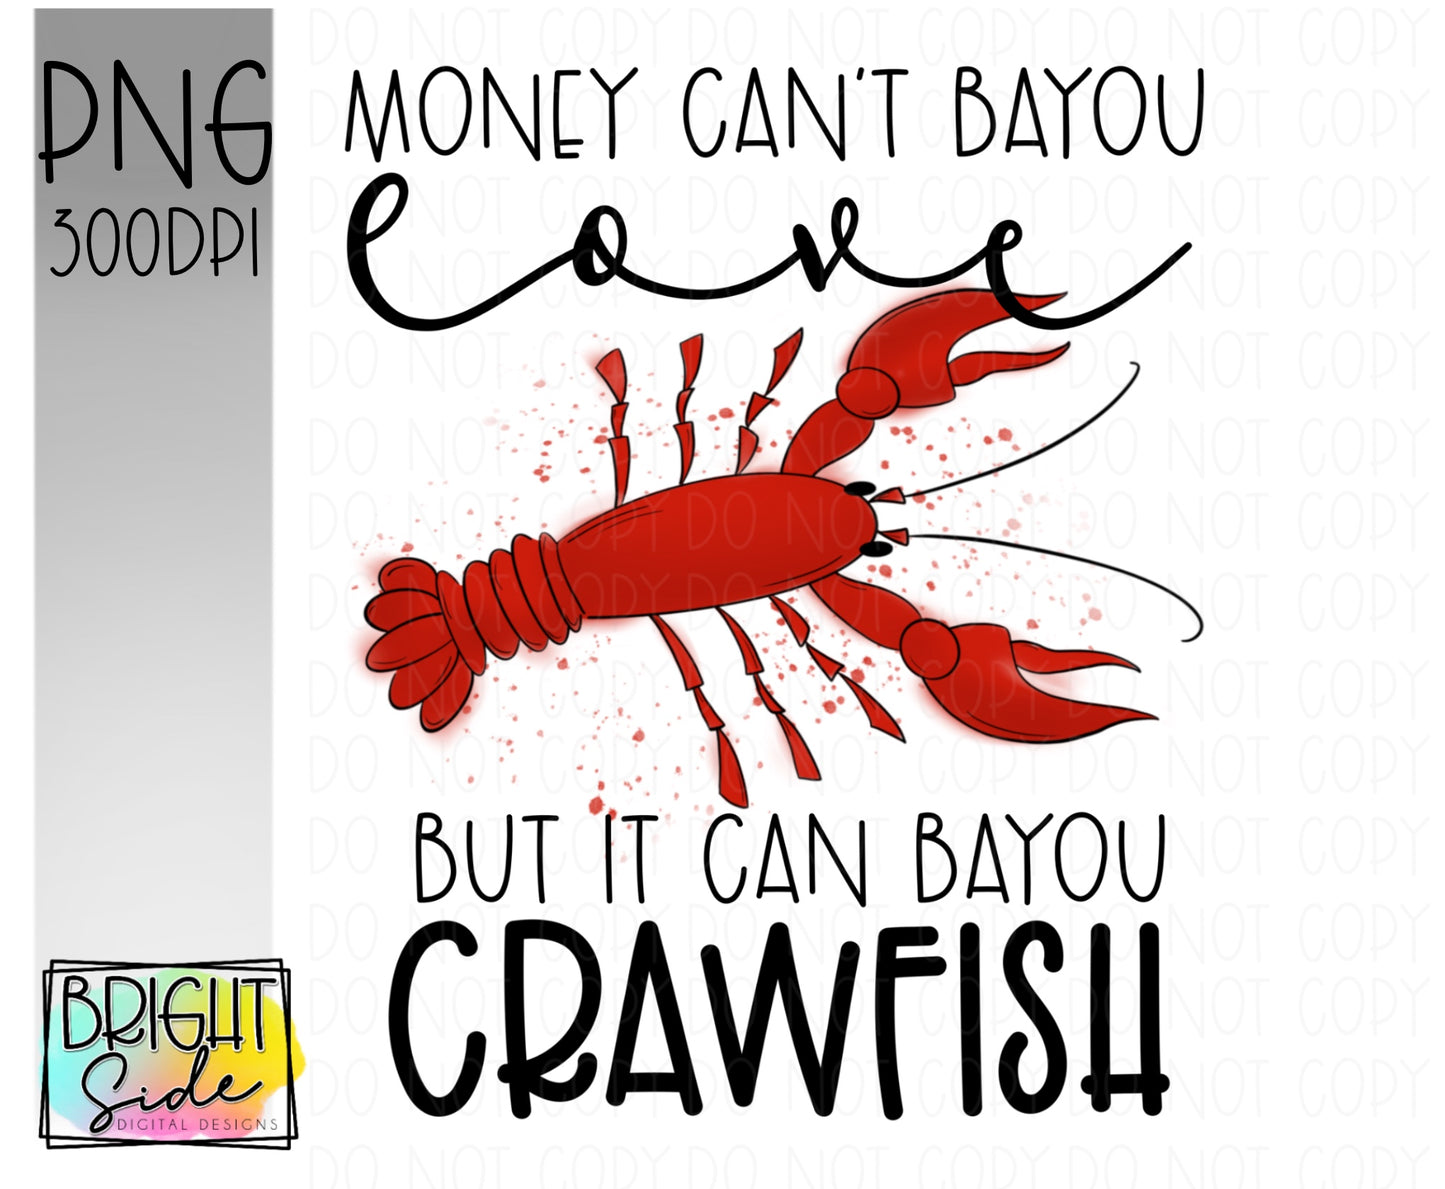 Bayou crawfish